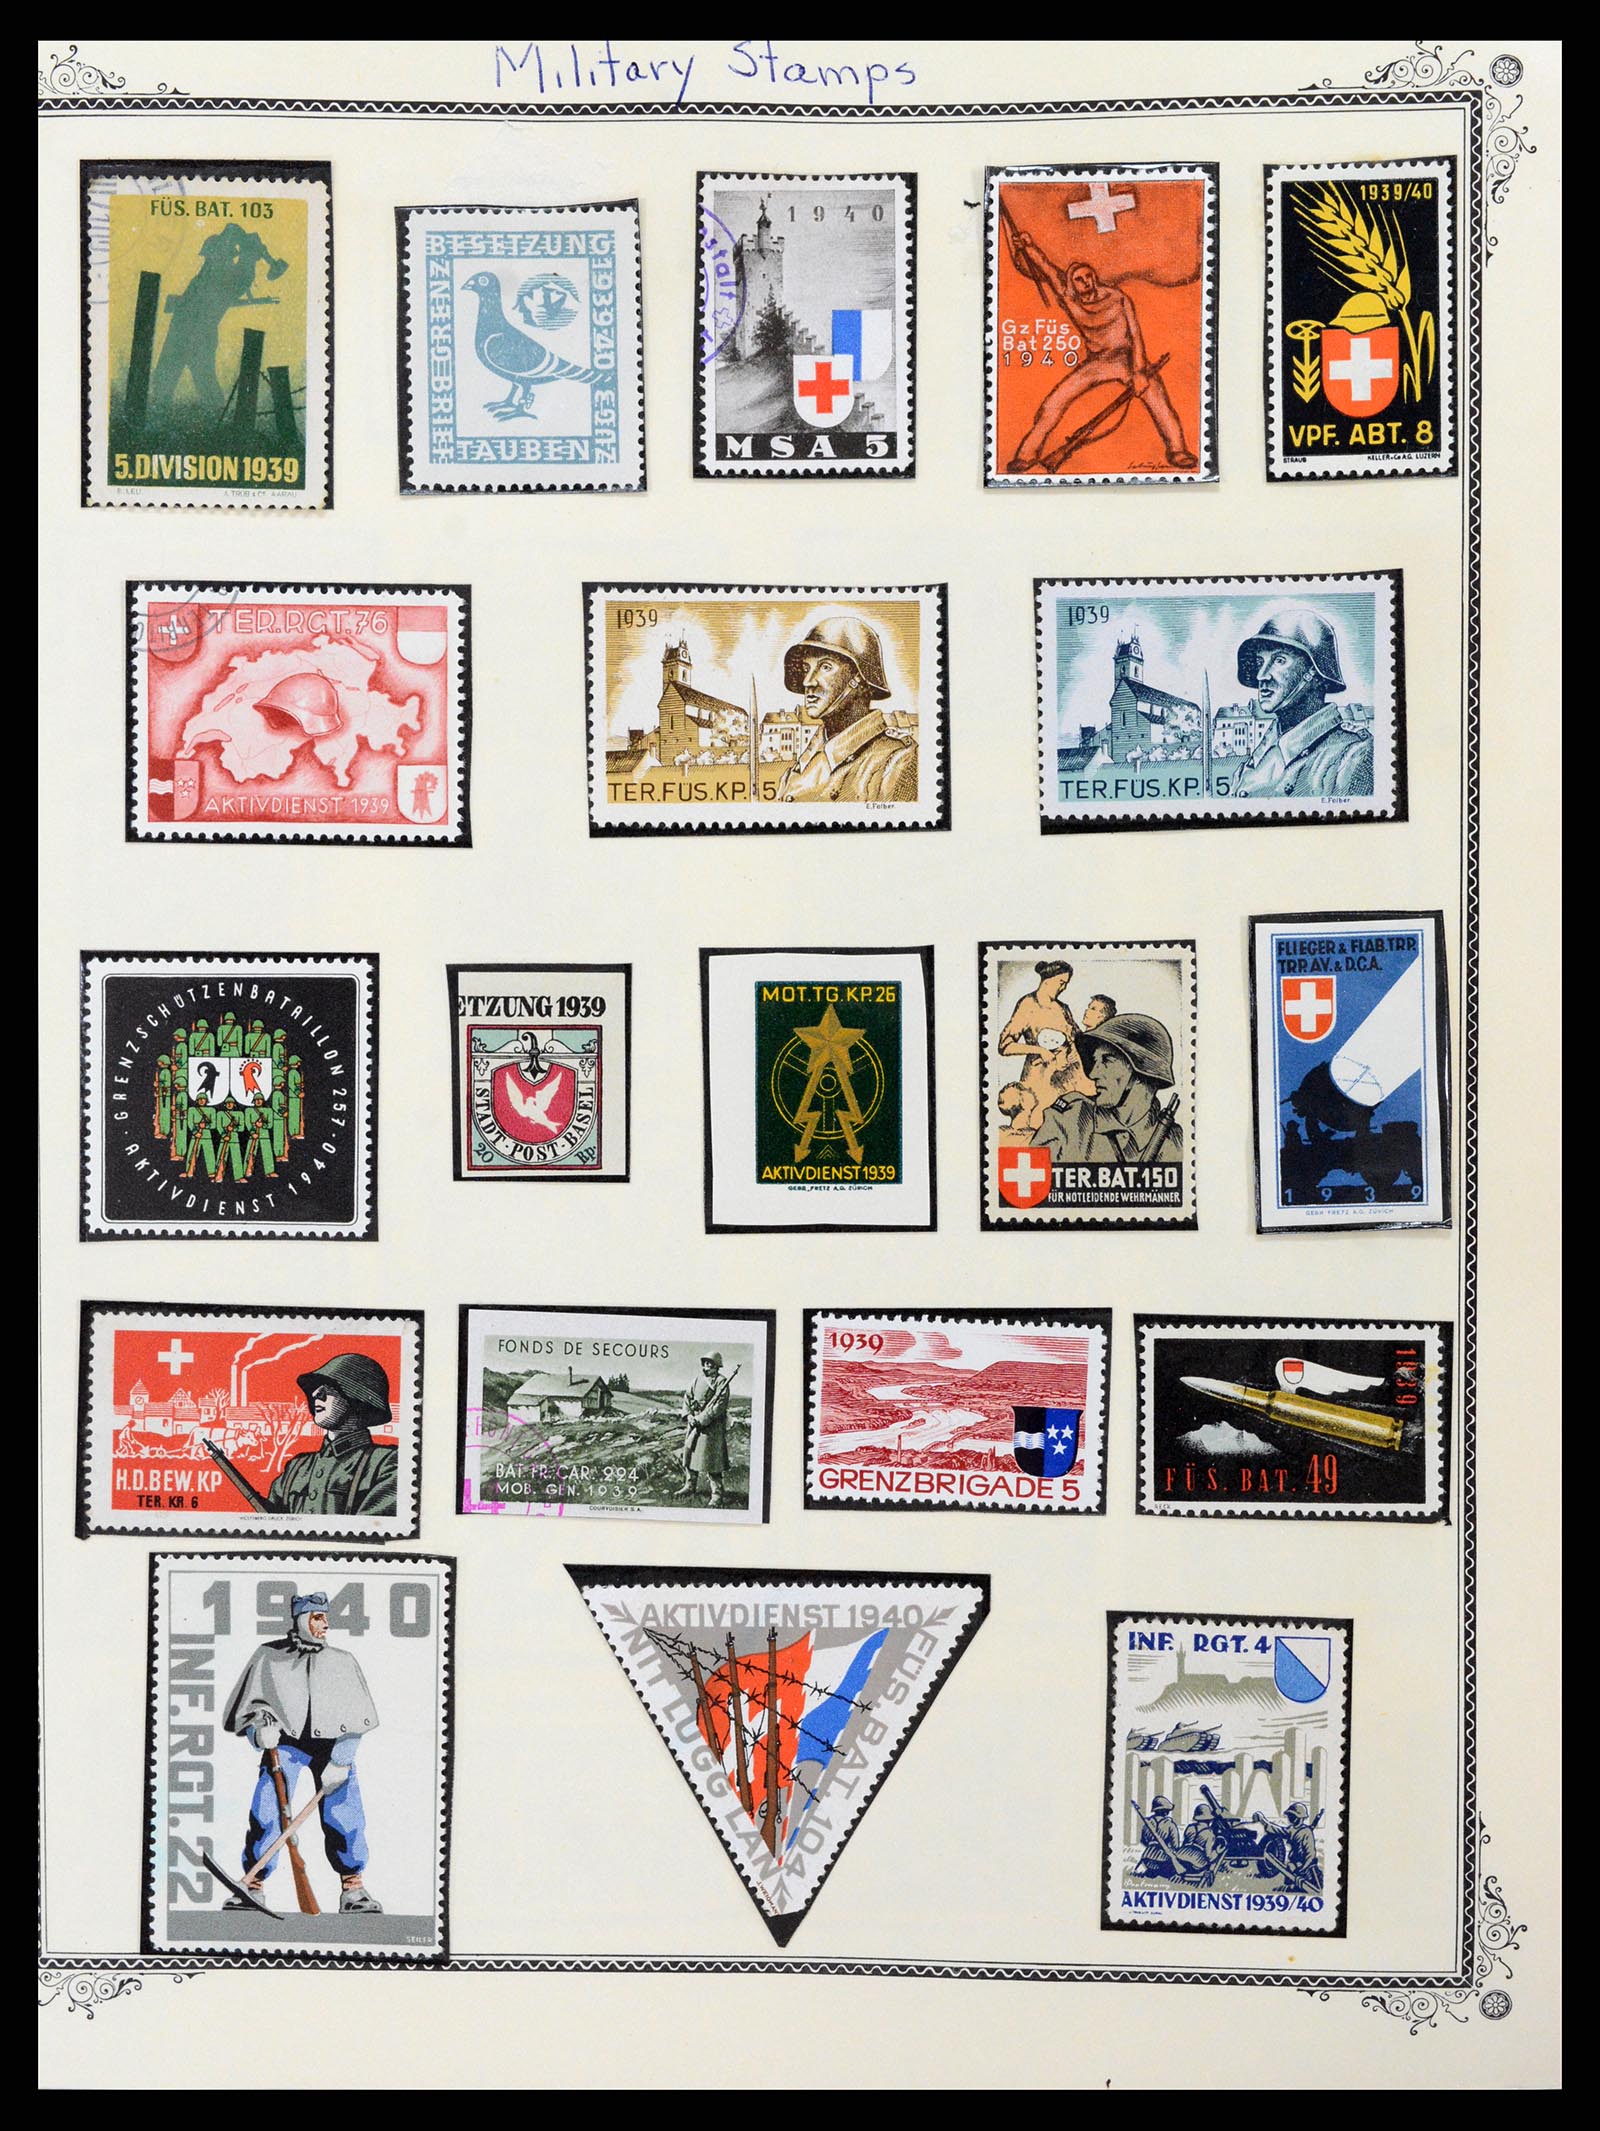 37642 005 - Stamp collection 37642 Switzerland soldier stamps 1914-1945.